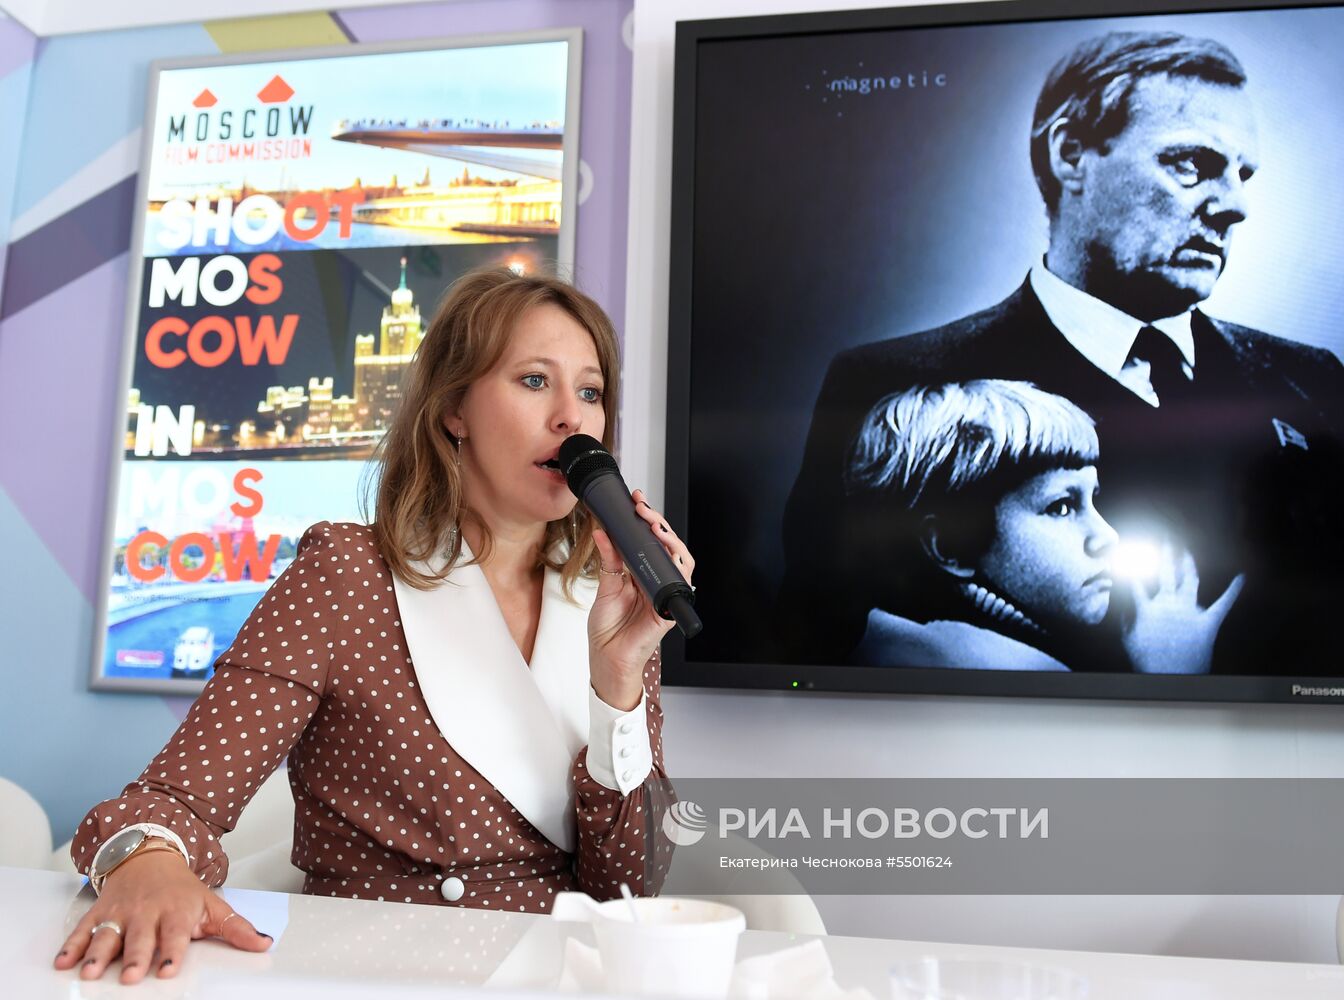 К. Собчак представила свой фильм "Дело Собчака" на Каннском фестивале